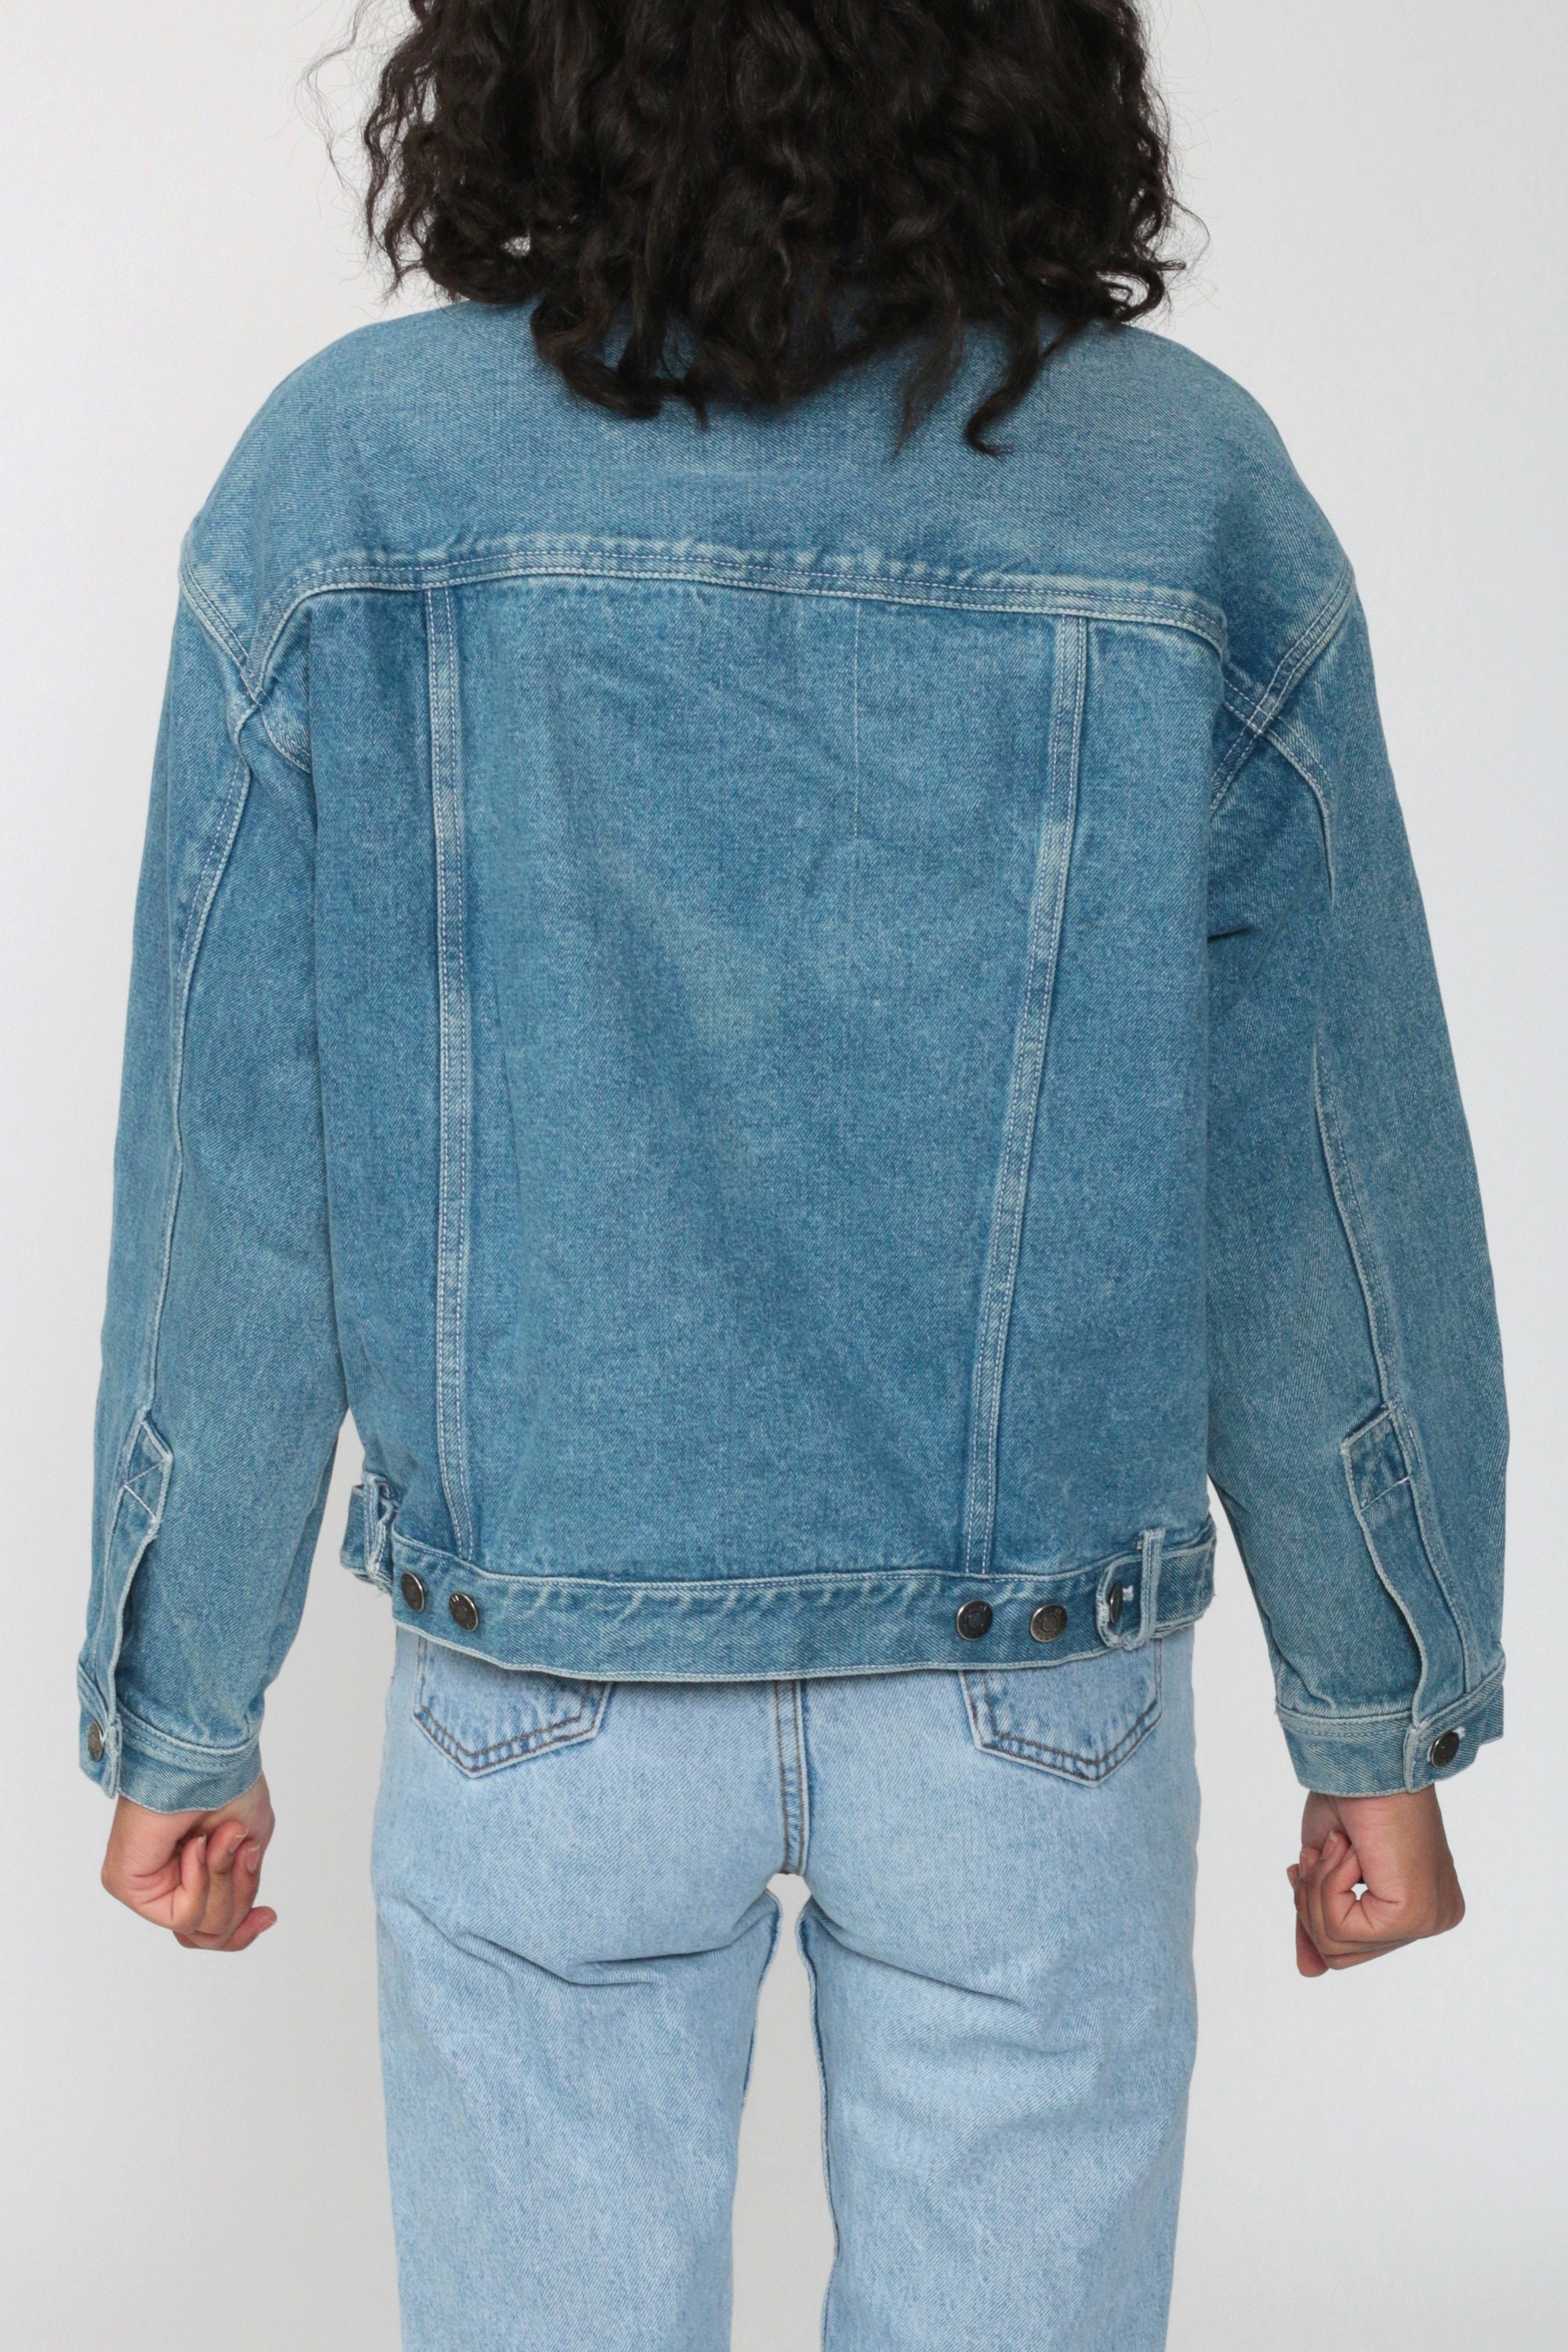 Calvin Klein Jacket 90s Denim Jacket Faded Jean Jacket Grunge Biker CK ...